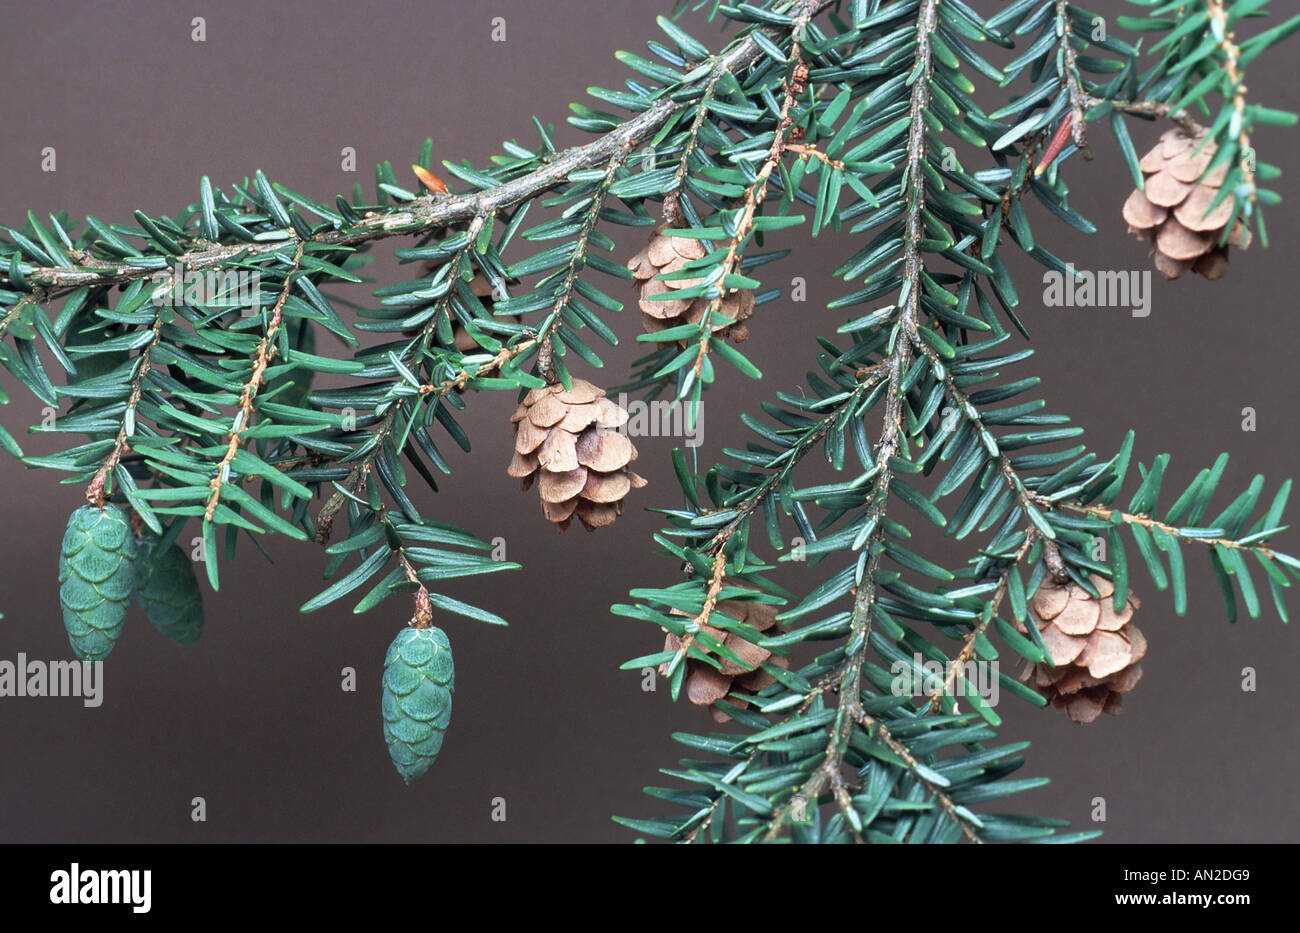 hemlock spruce, eastern hemlock (Tsuga canadensis), unripe an ripe cones, Germany, Spessart Stock Photo